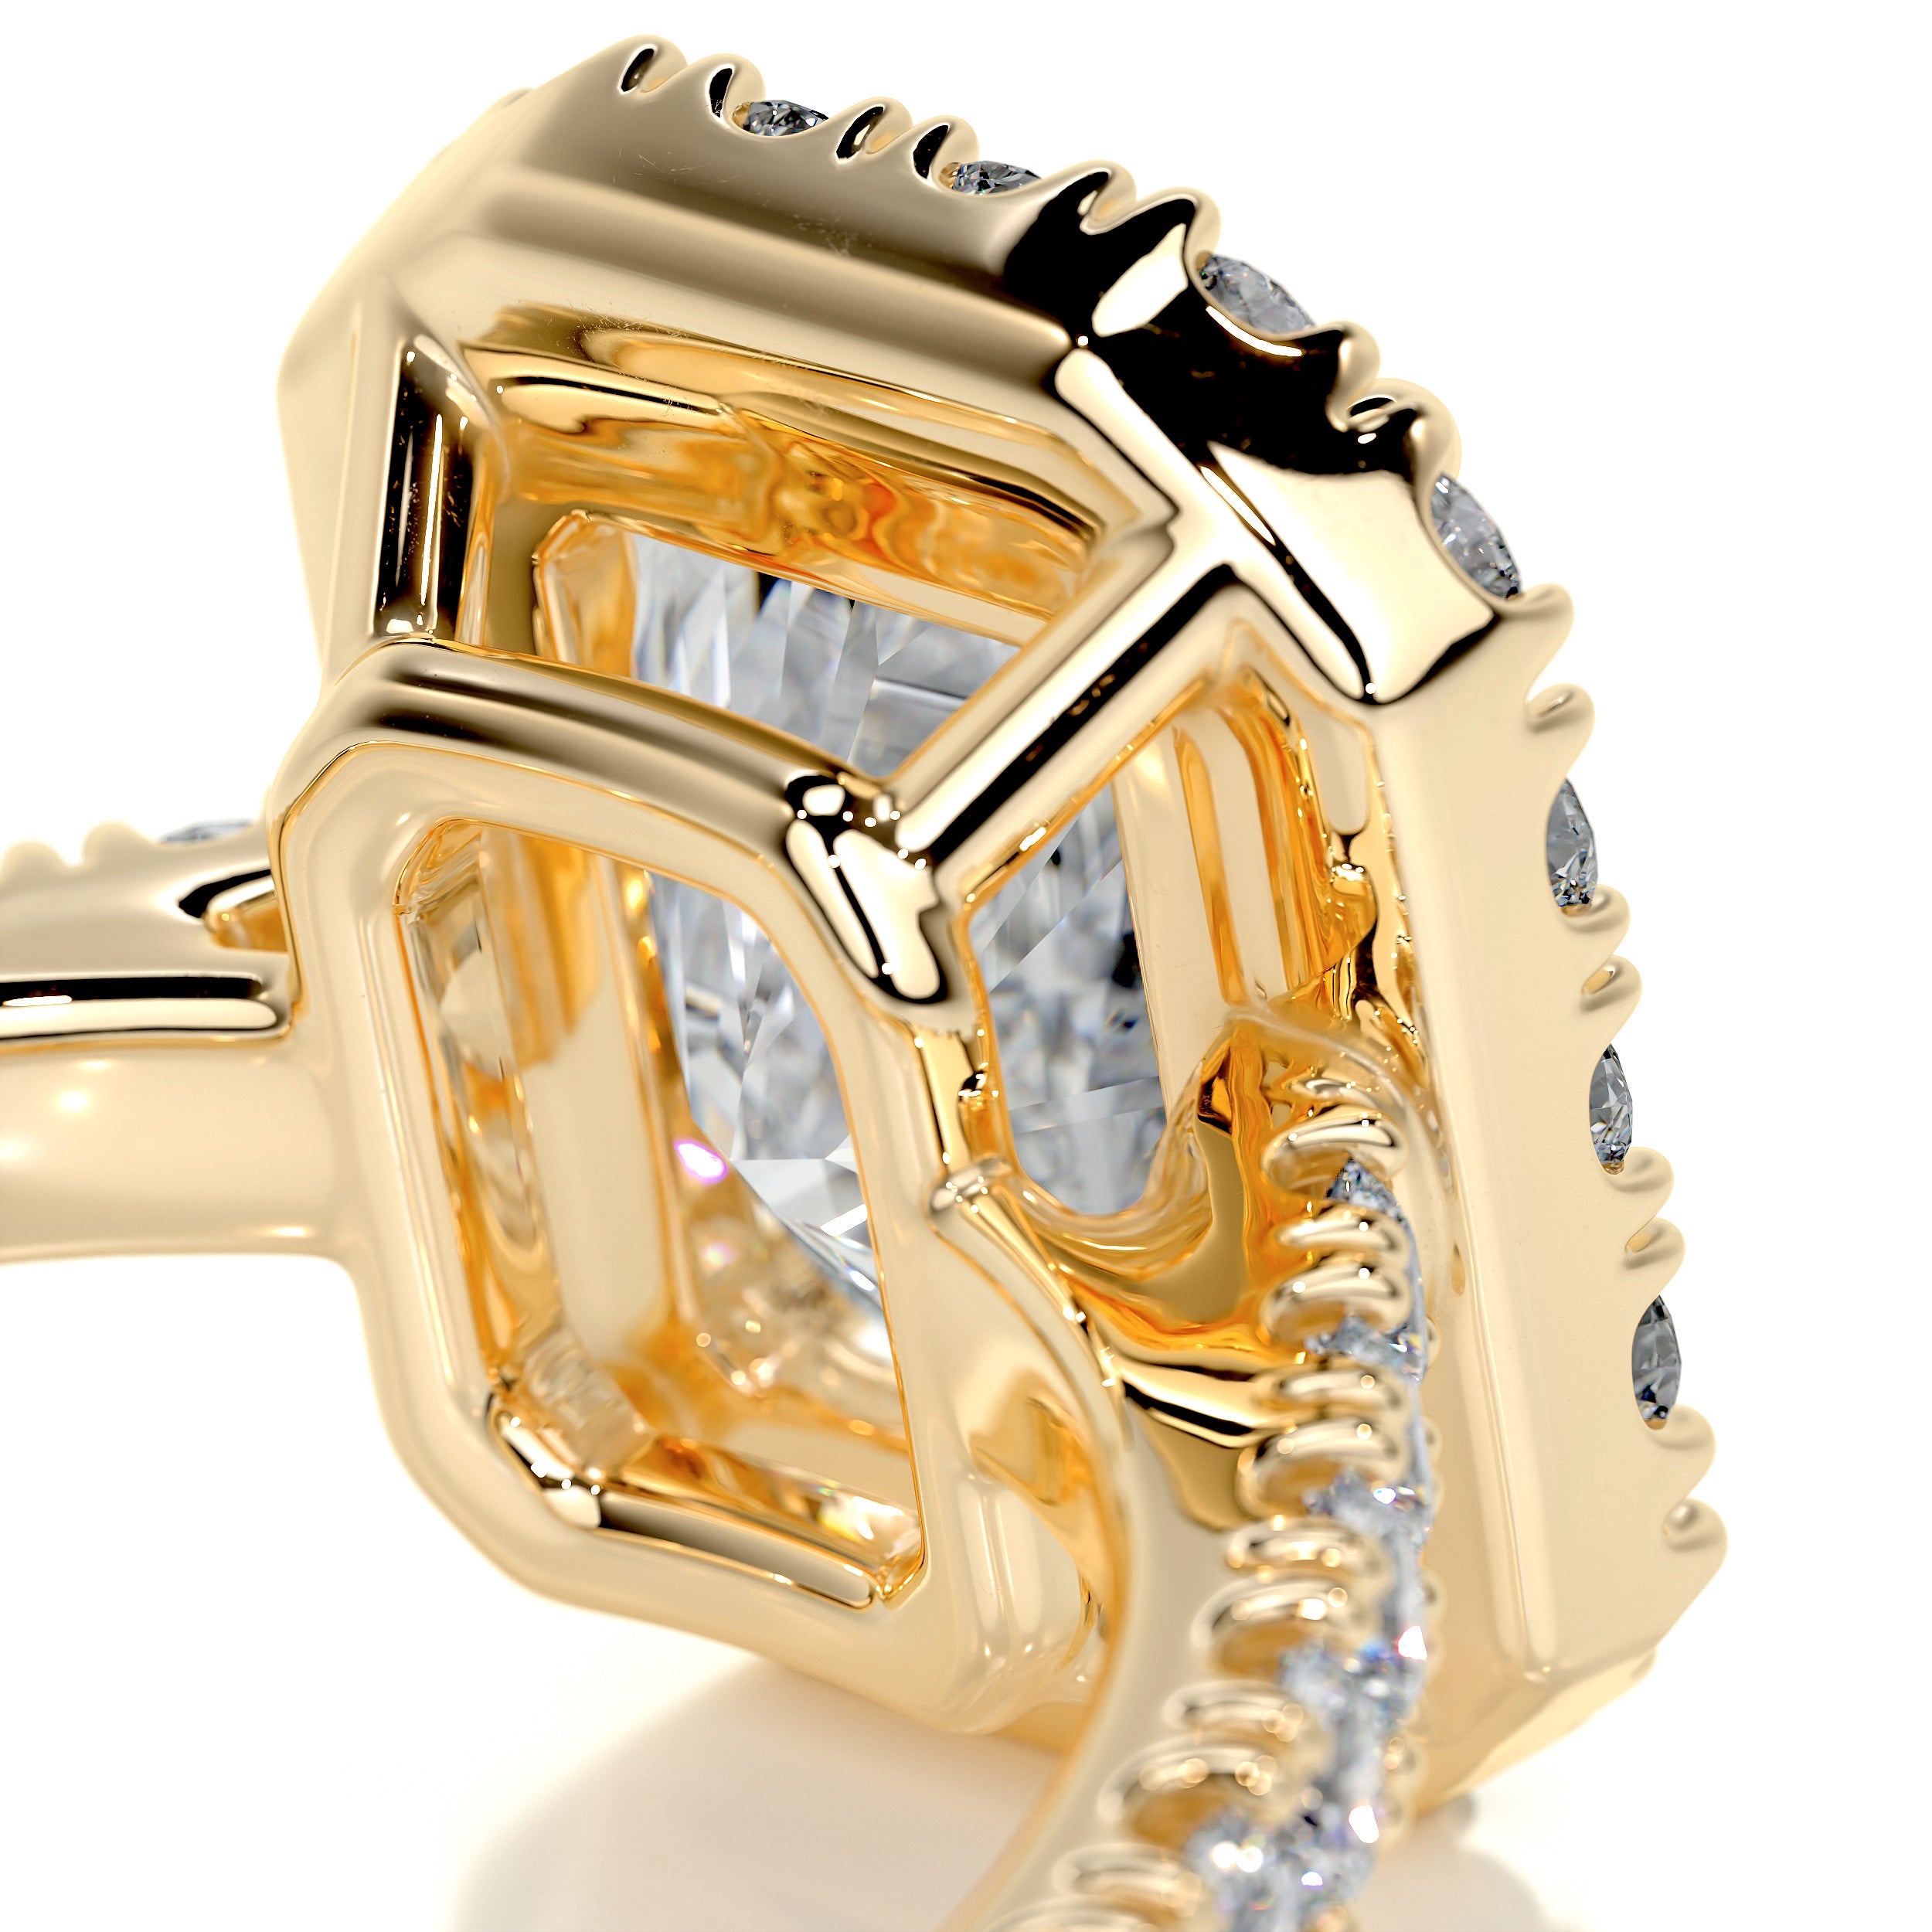 Andrea Diamond Engagement Ring -18K Yellow Gold